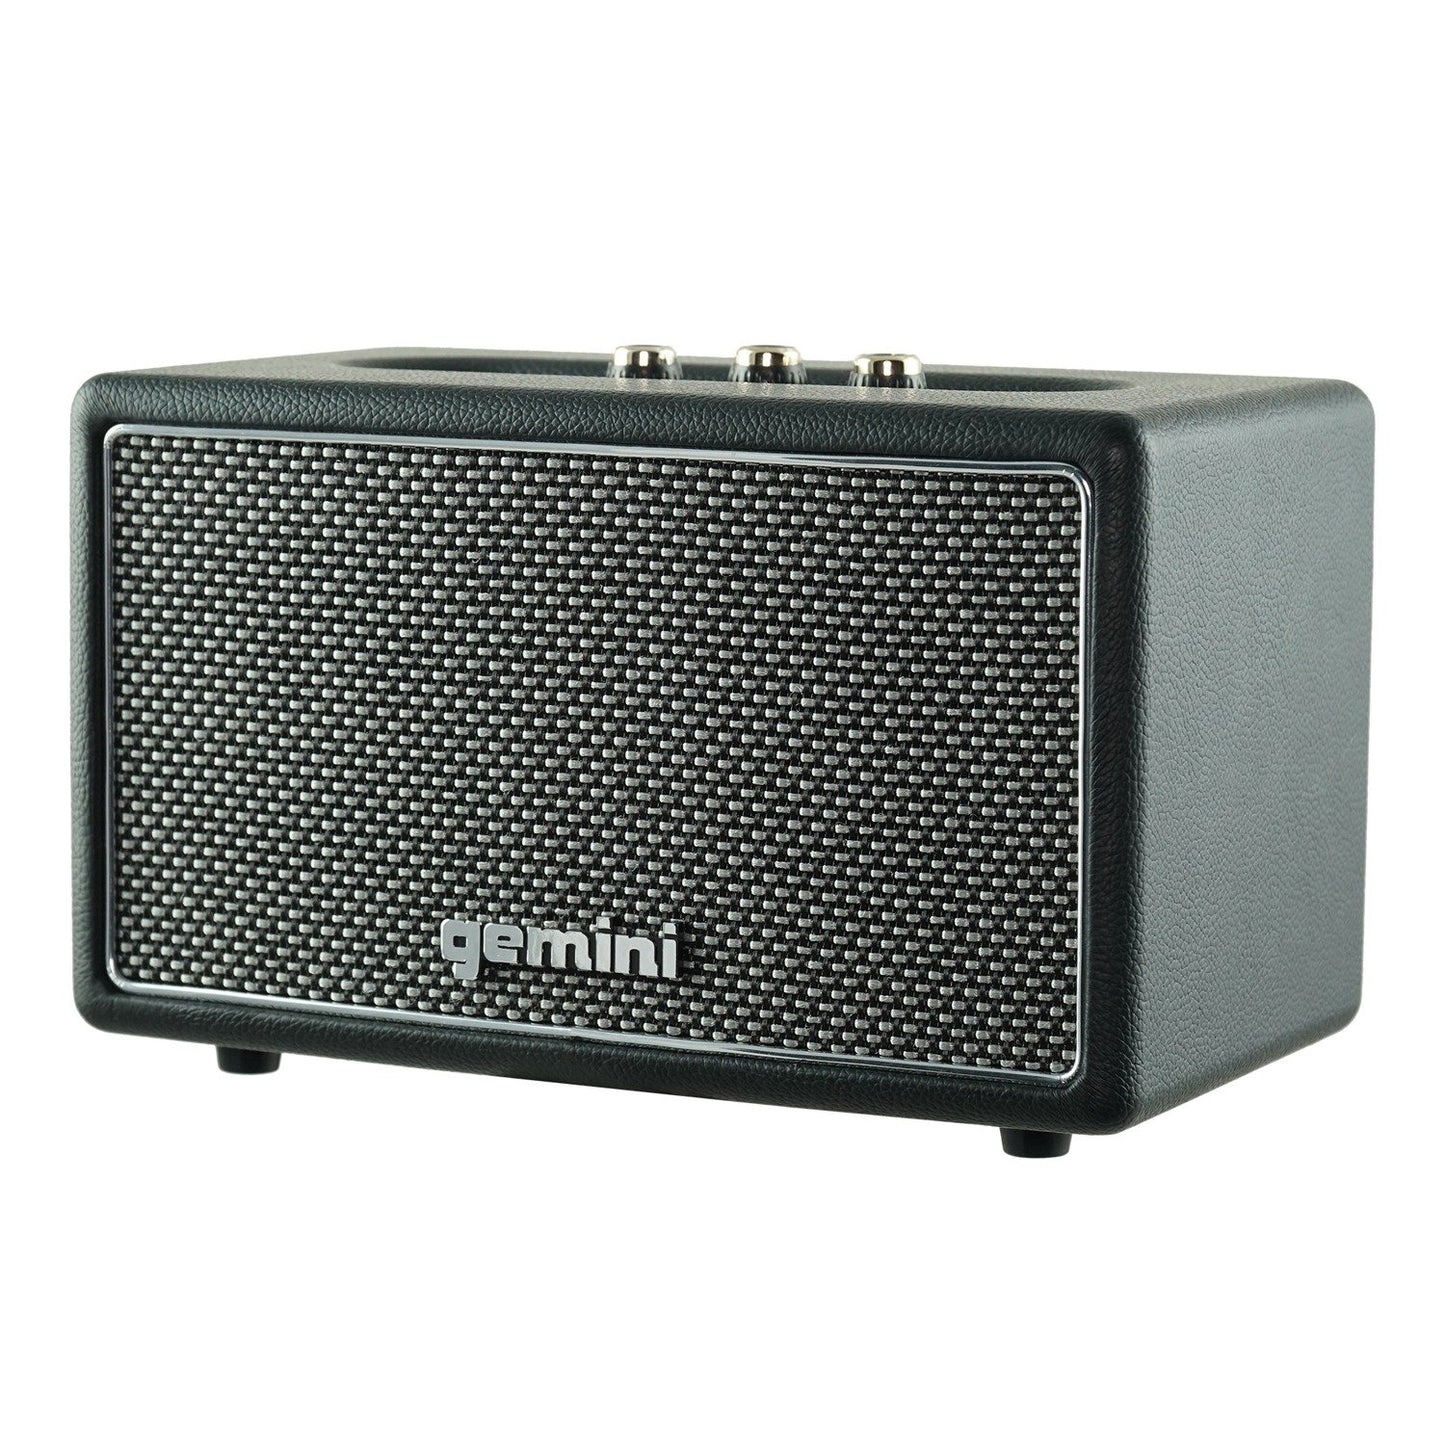 Gemini GTR-200 Portable Bluetooth Speaker